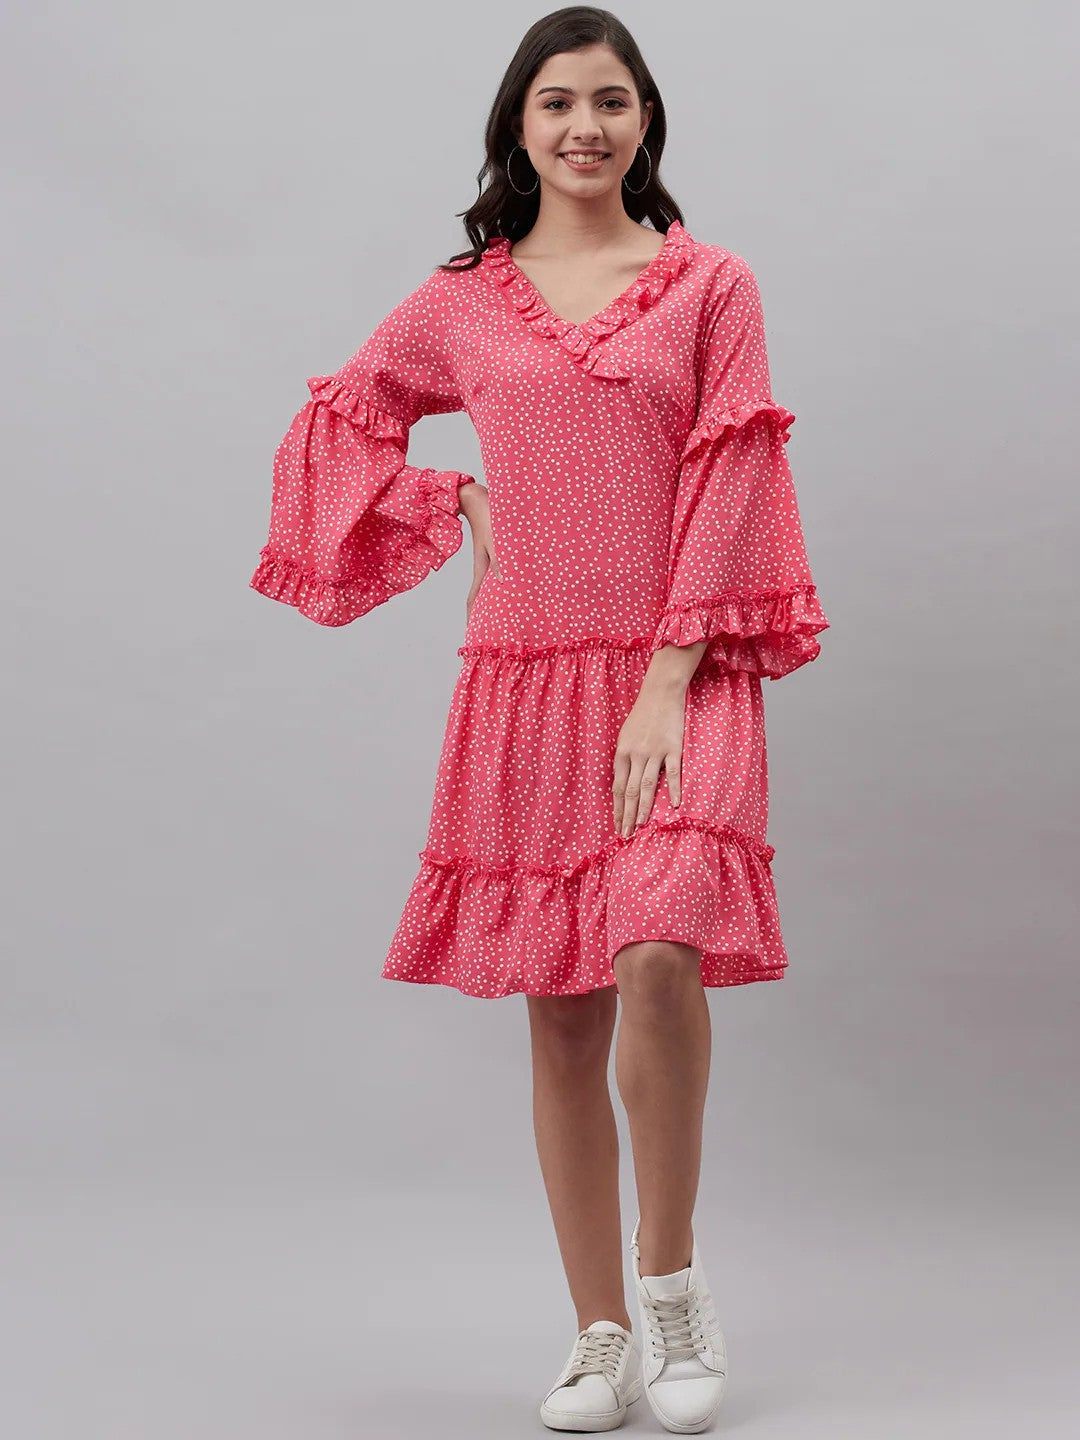 plusS Pink  Off White Polka Dots Print A-Line Dress